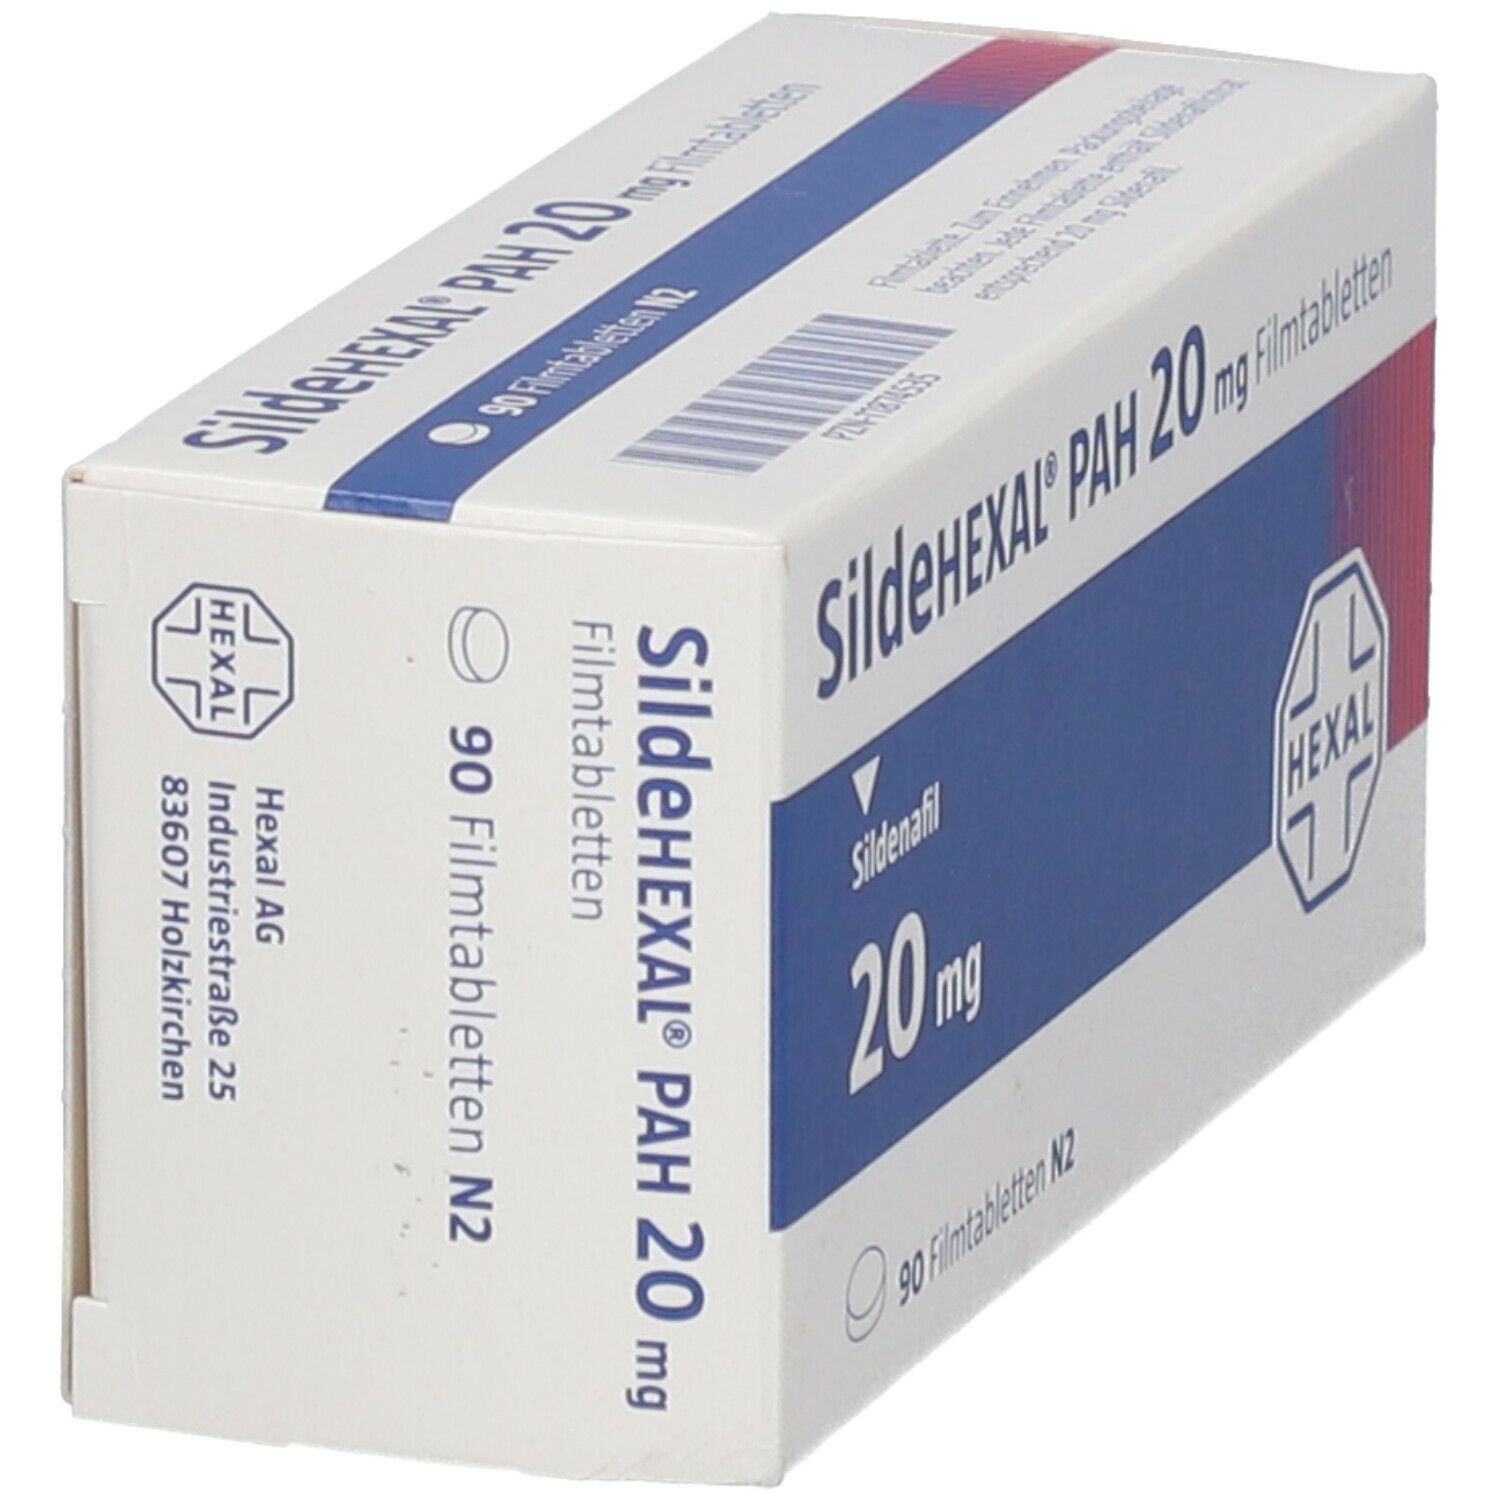 SildeHEXAL® PAH 20 mg